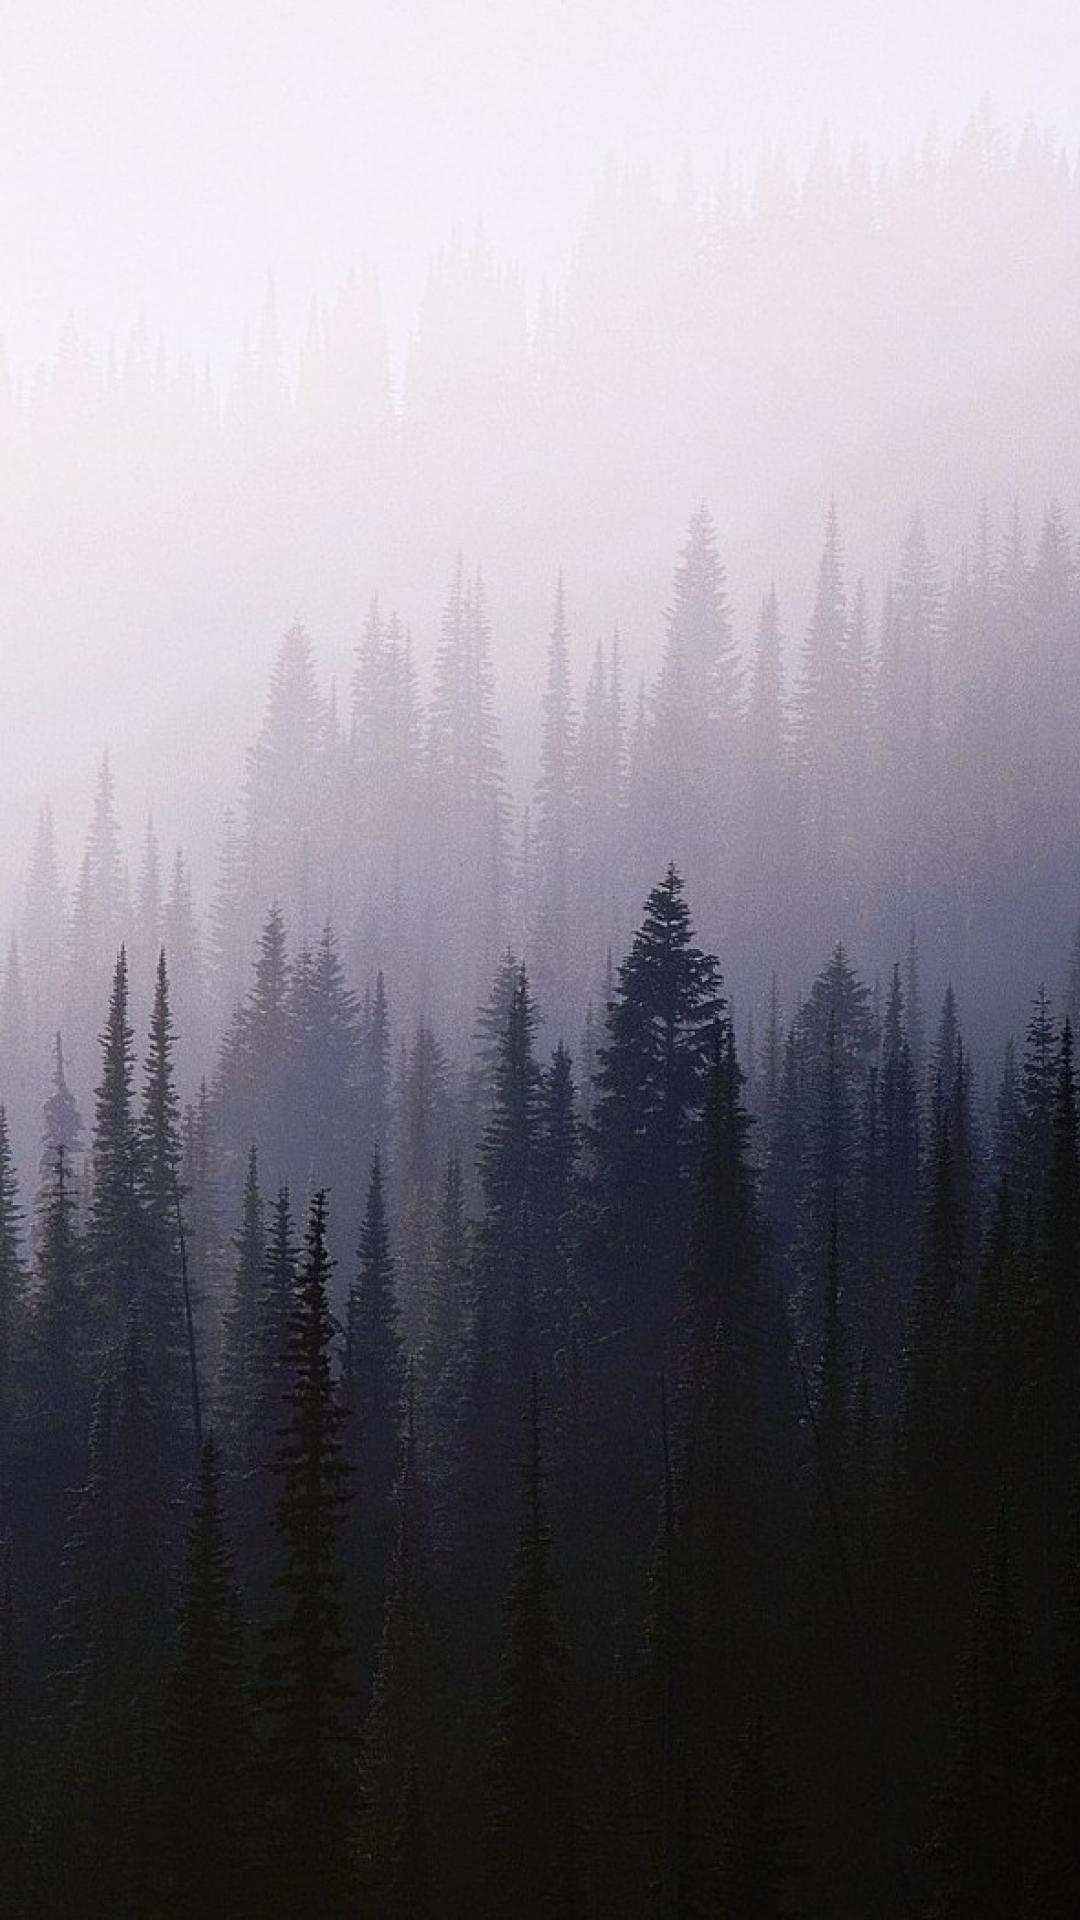 Resultado de imagen para forest wallpaper tumblr iphone. Screen